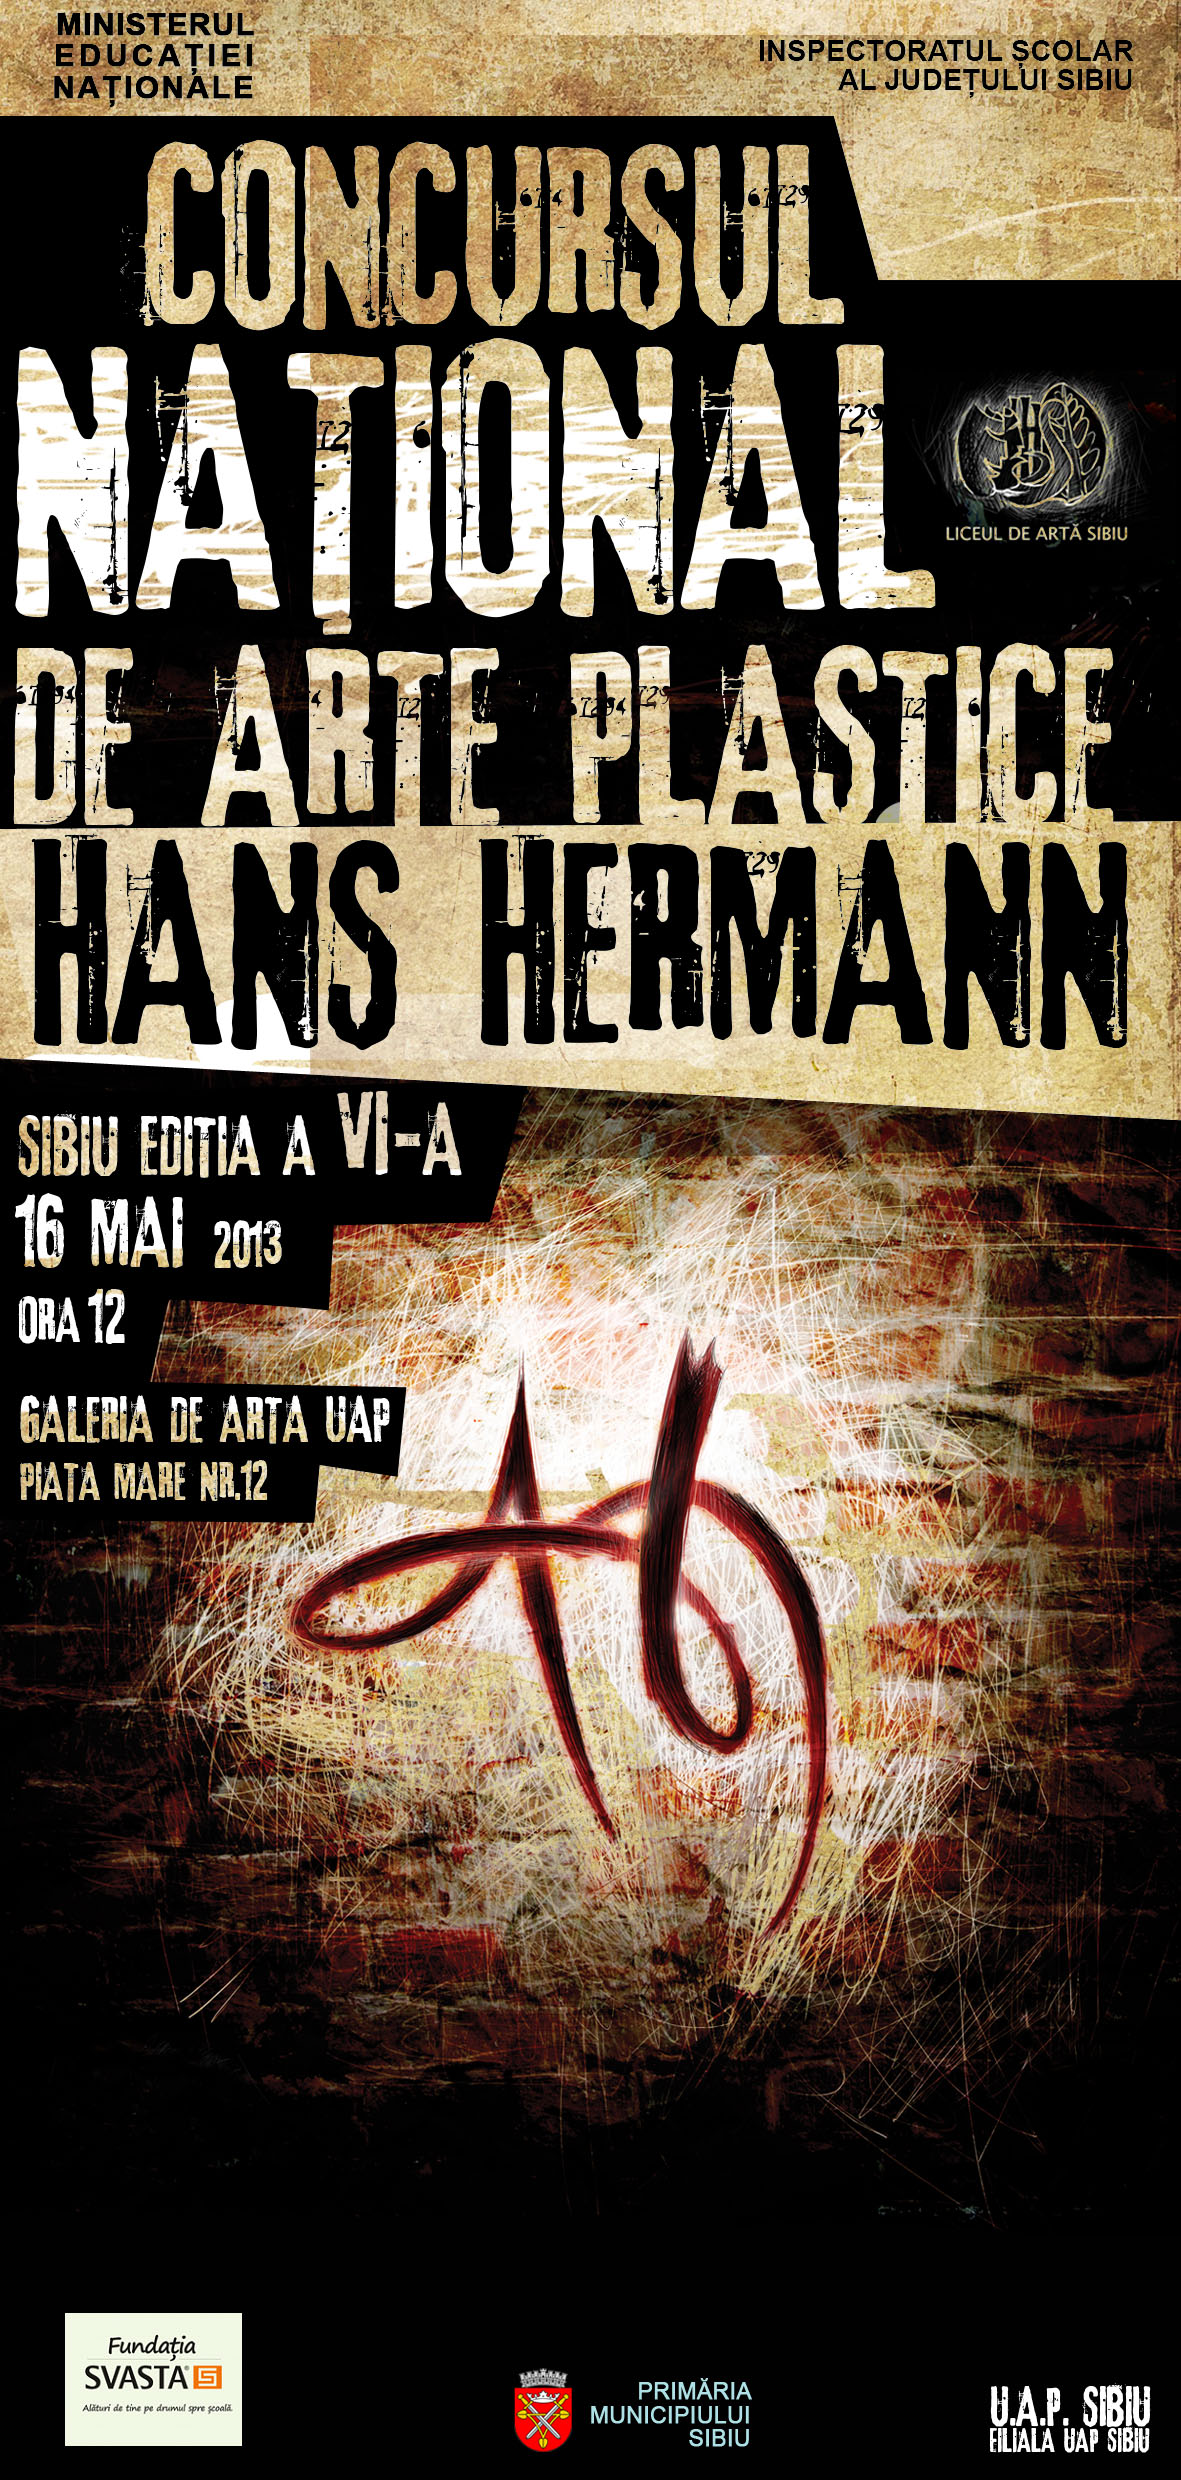 Concursul National de Arta Plastica "Hans Hermann"